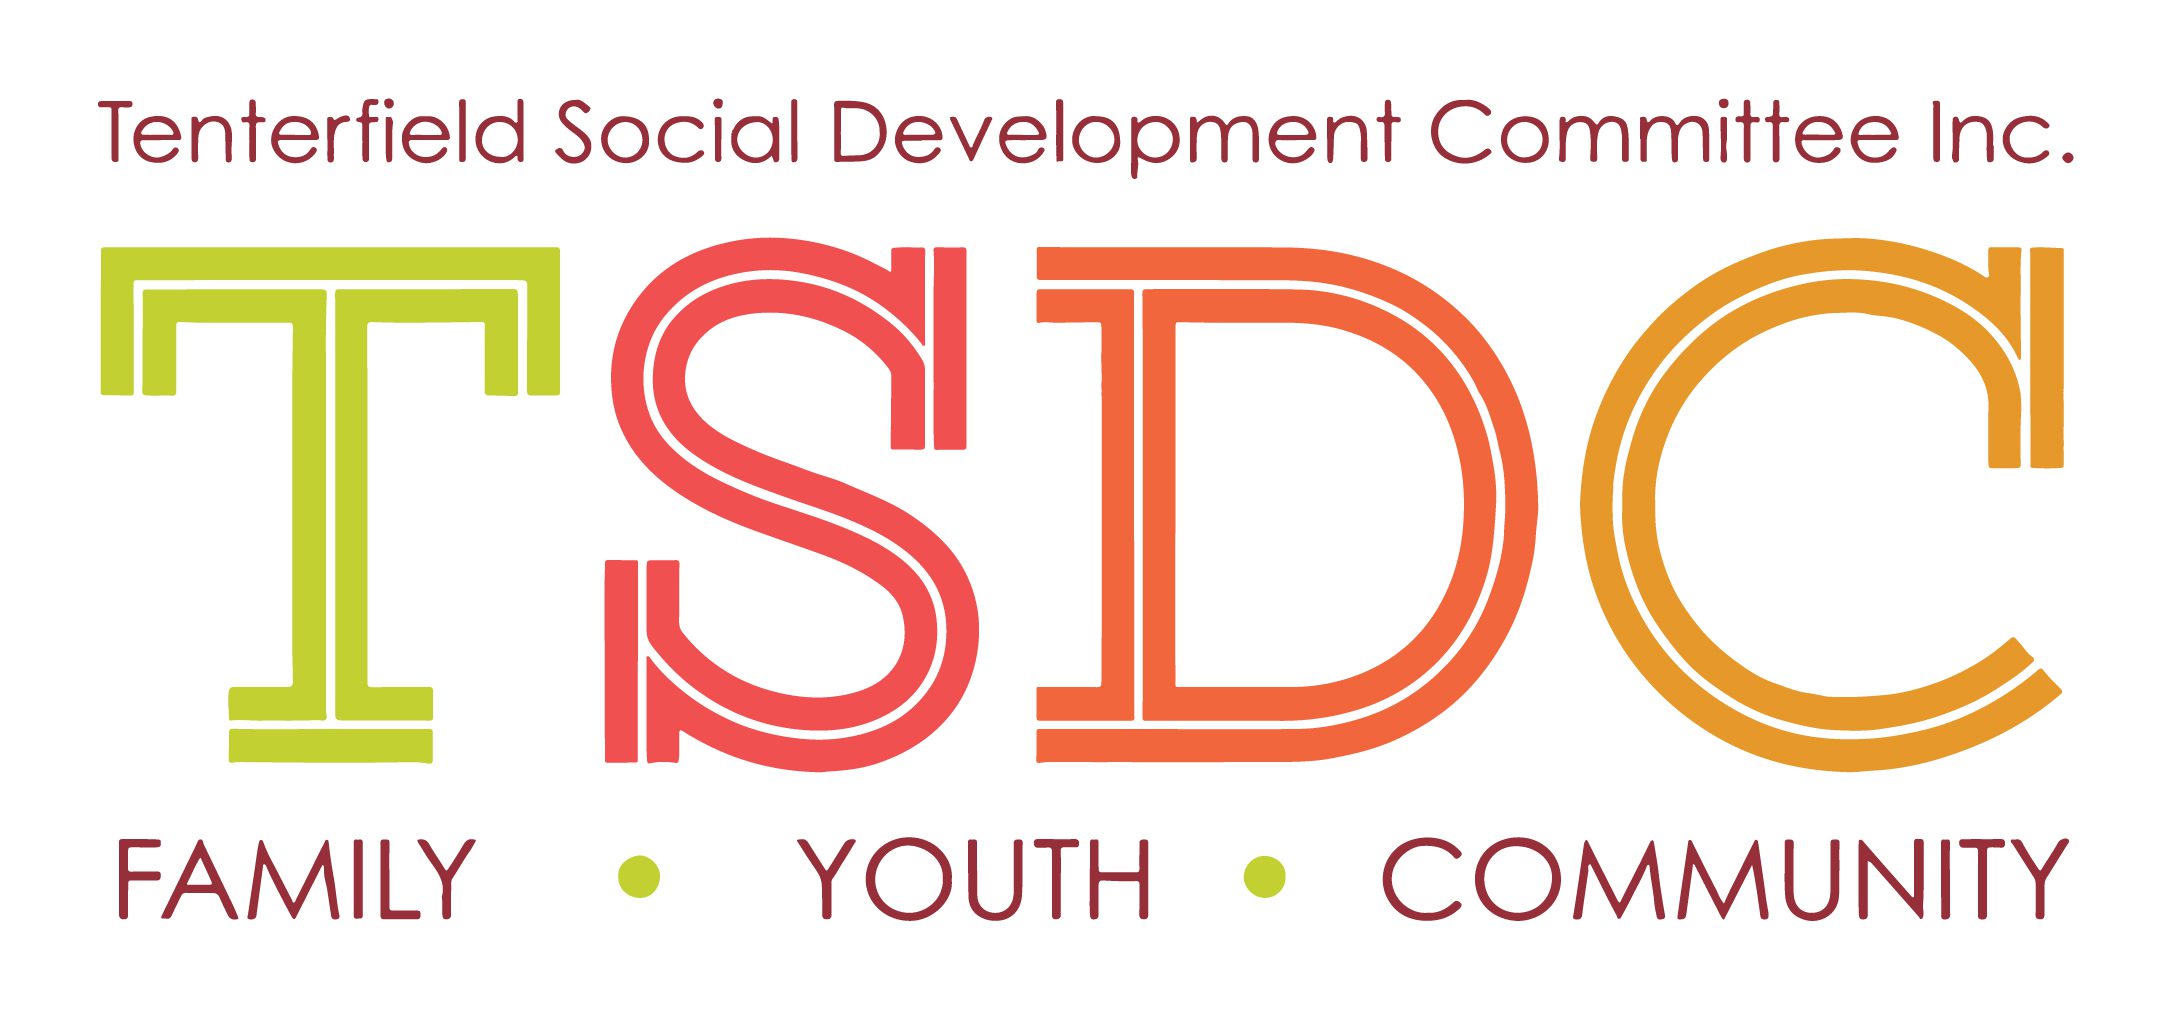 Tenterfield Social Development Committee